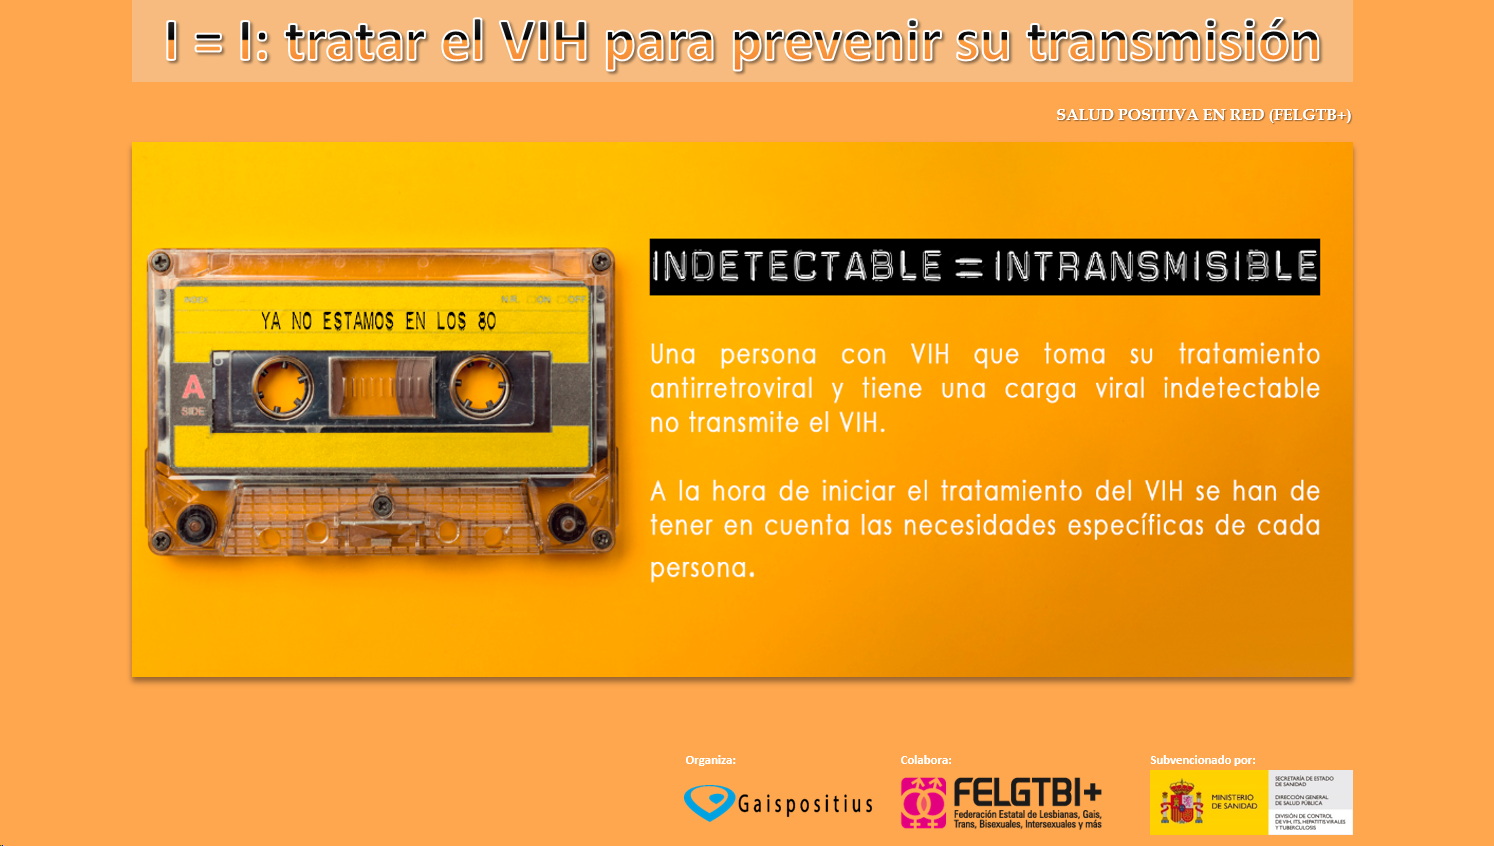 Indetectable = intransmissible